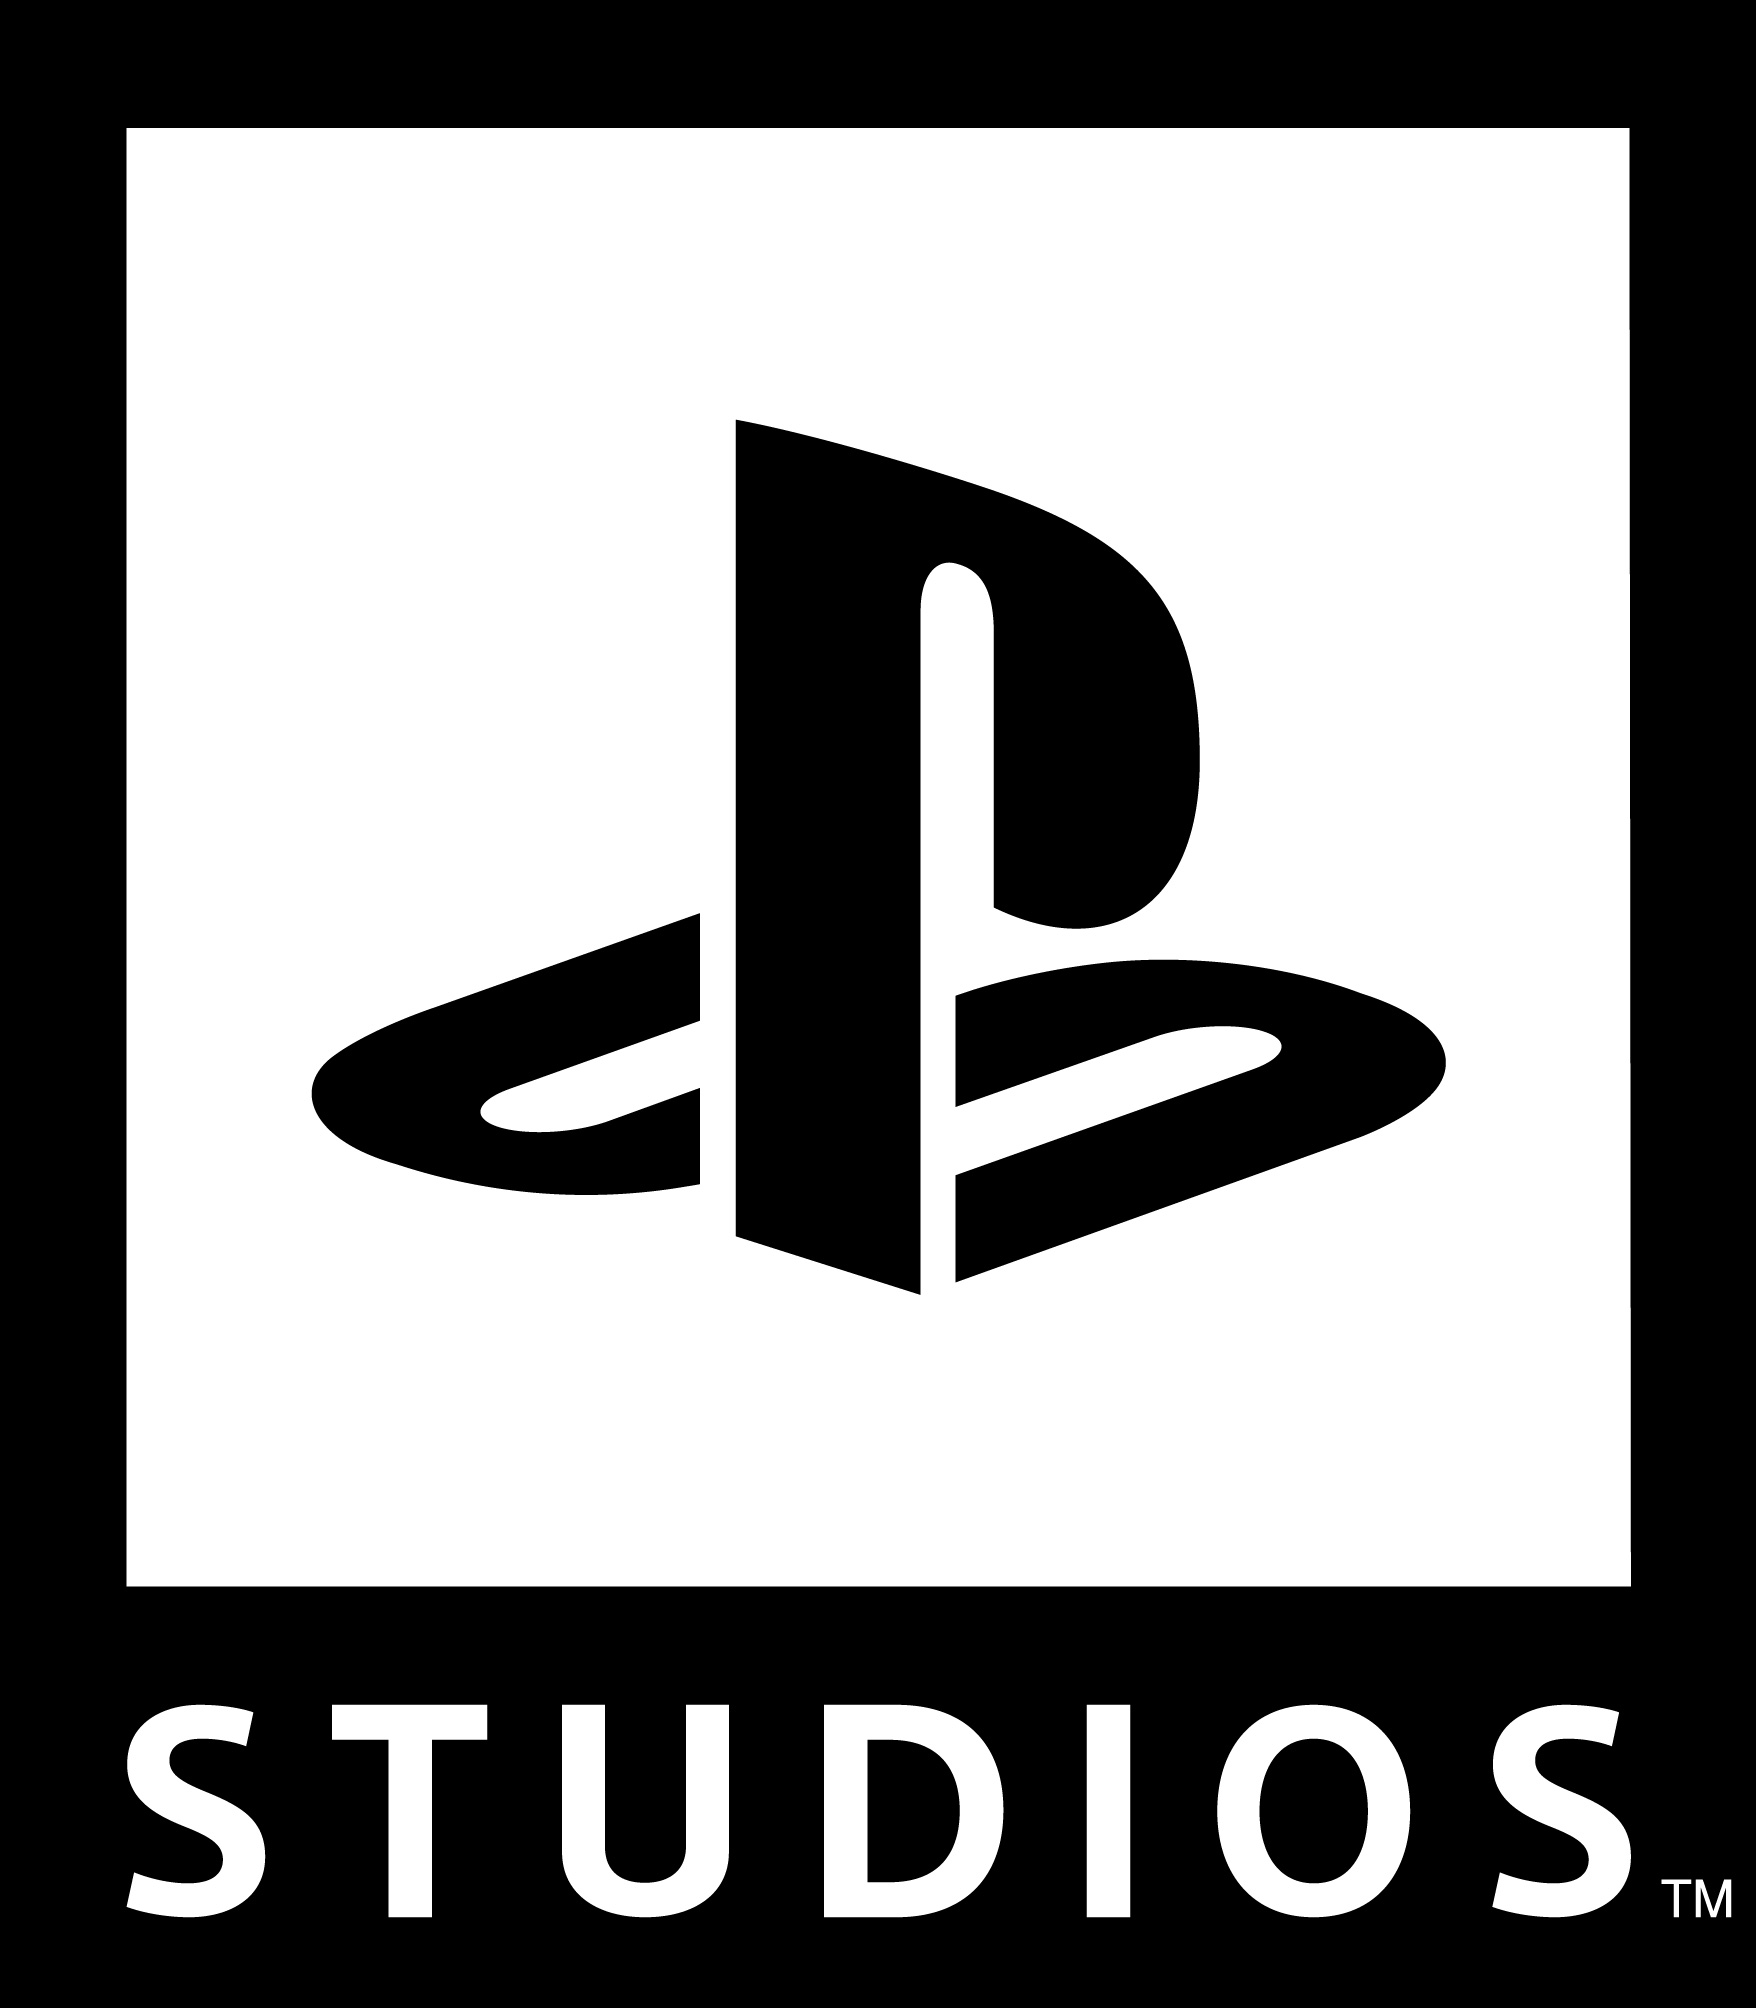 PlayStation is Acquiring Firewalk Studios